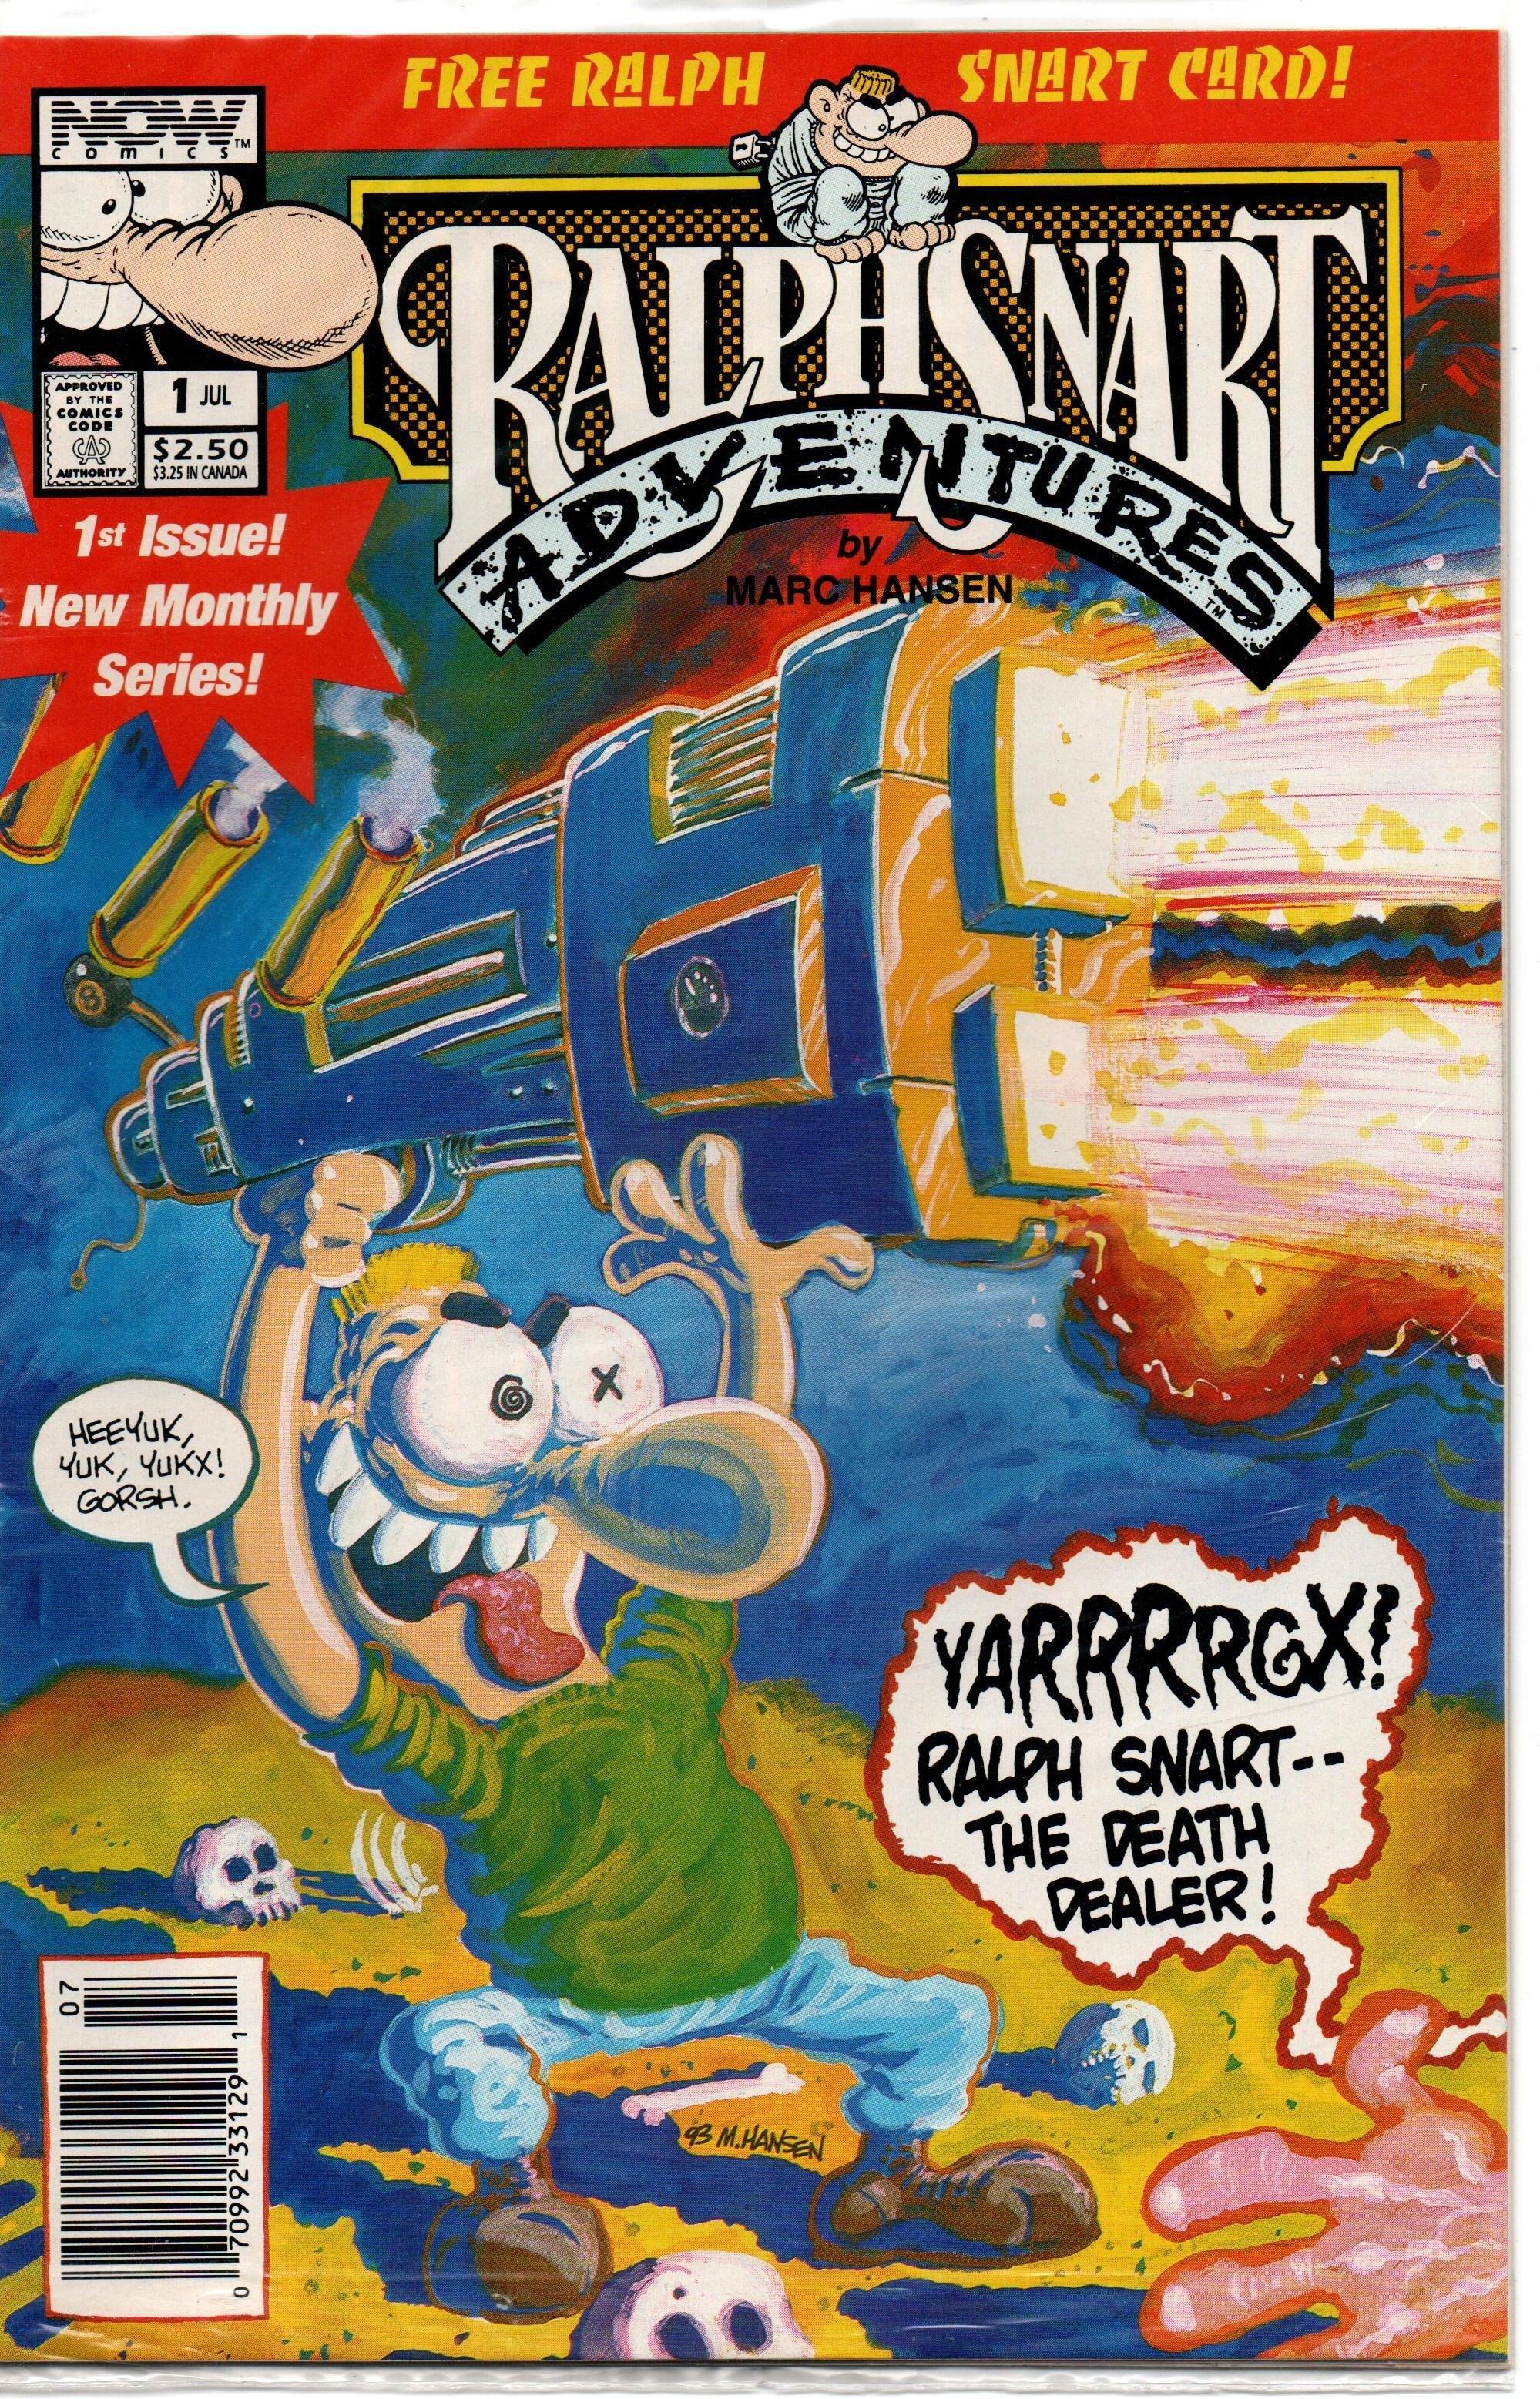 RALPH SNART ADVENTURES VOL 5 (07/1993 to 11/1993) #1